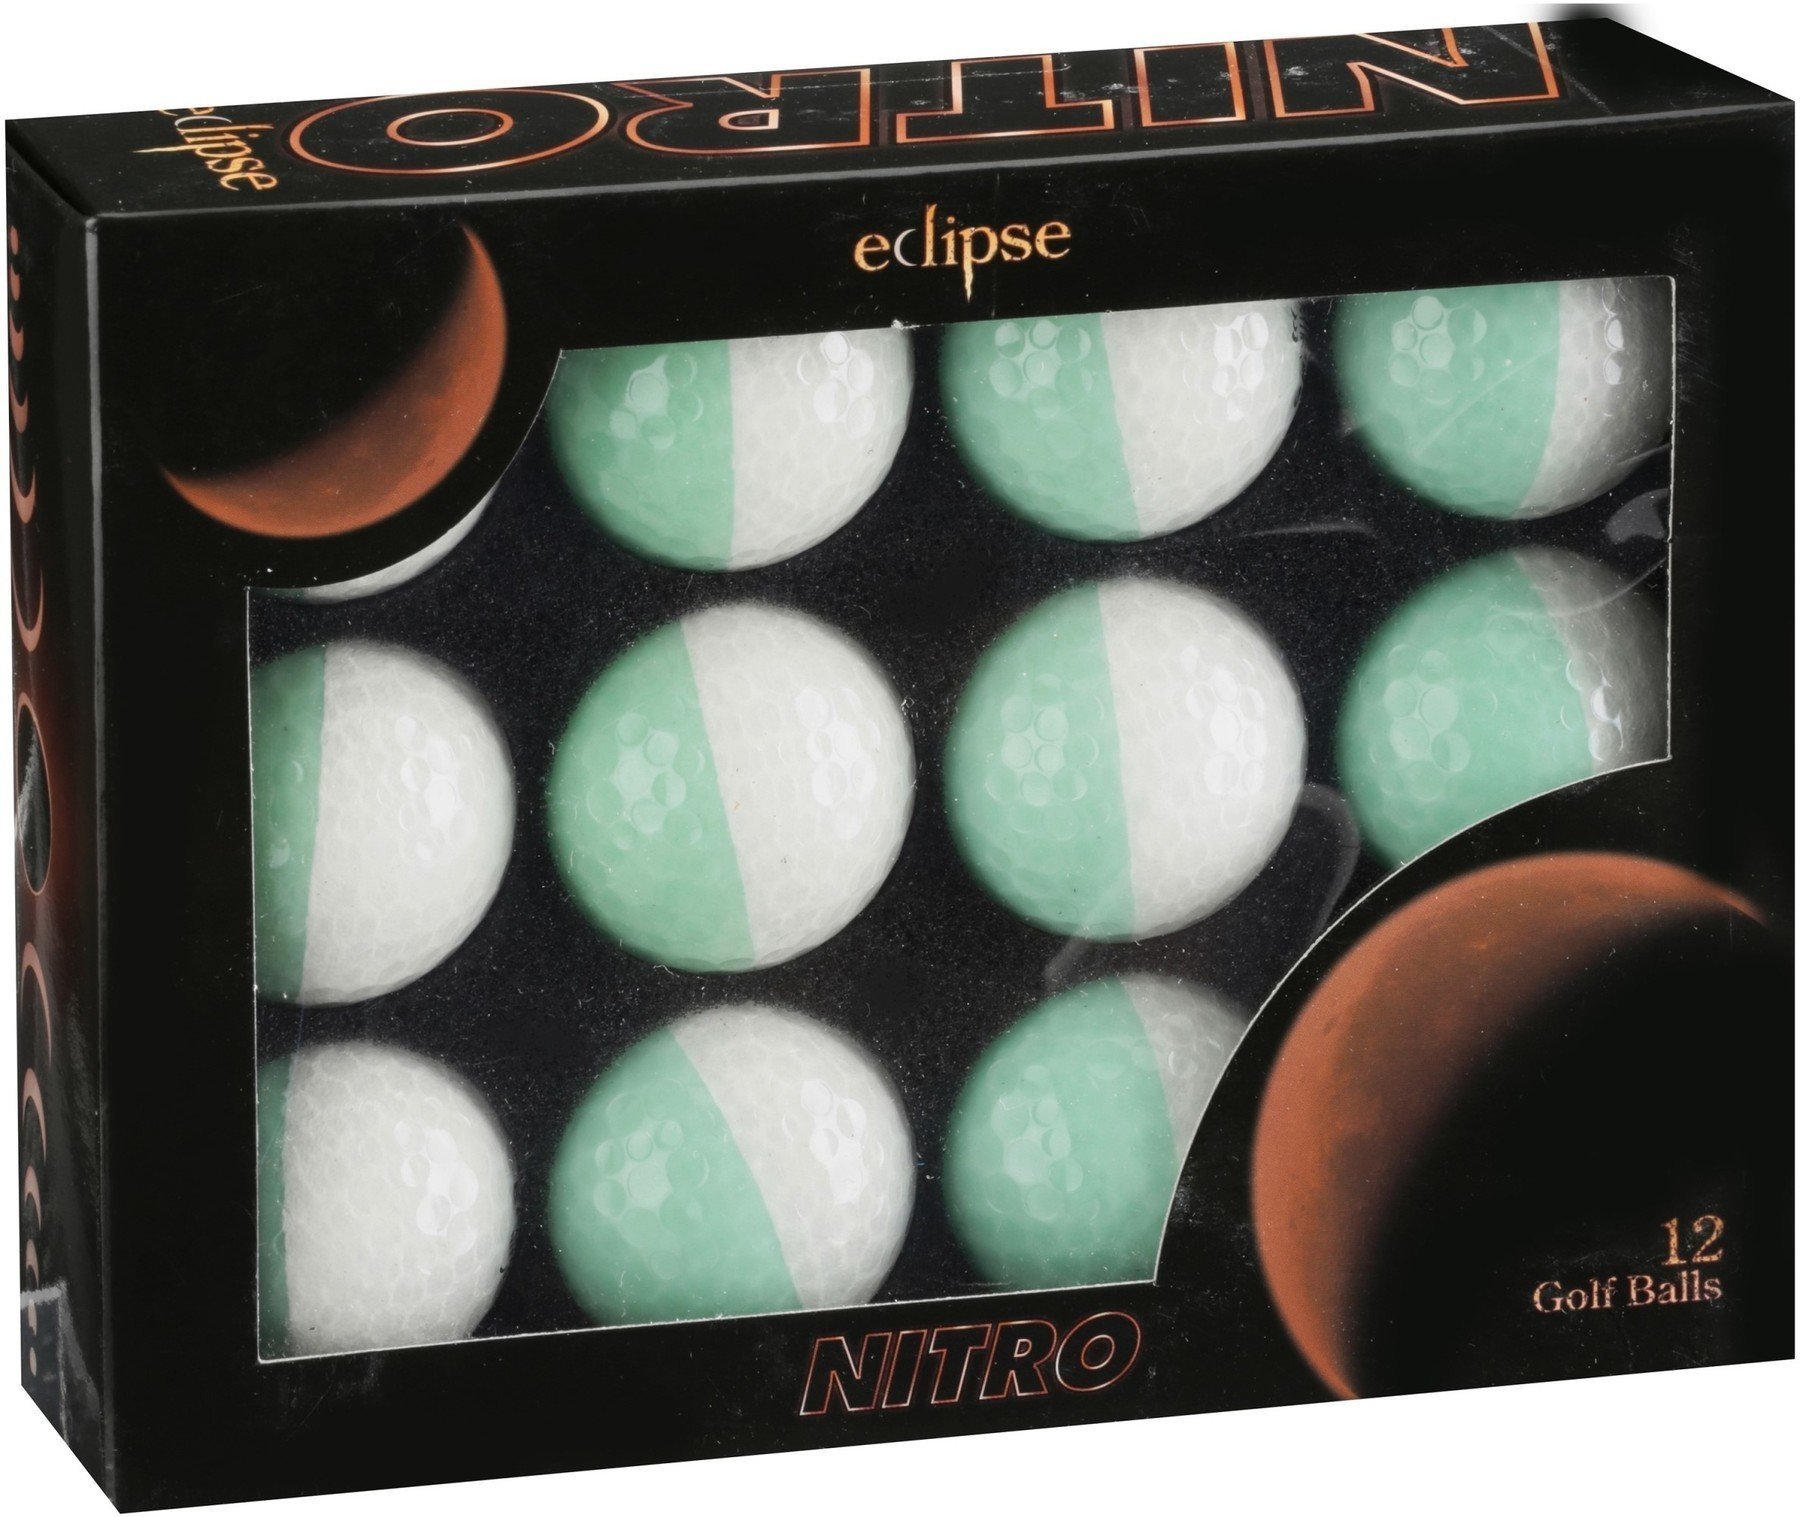 Piłka golfowa Nitro Eclipse White/Mint